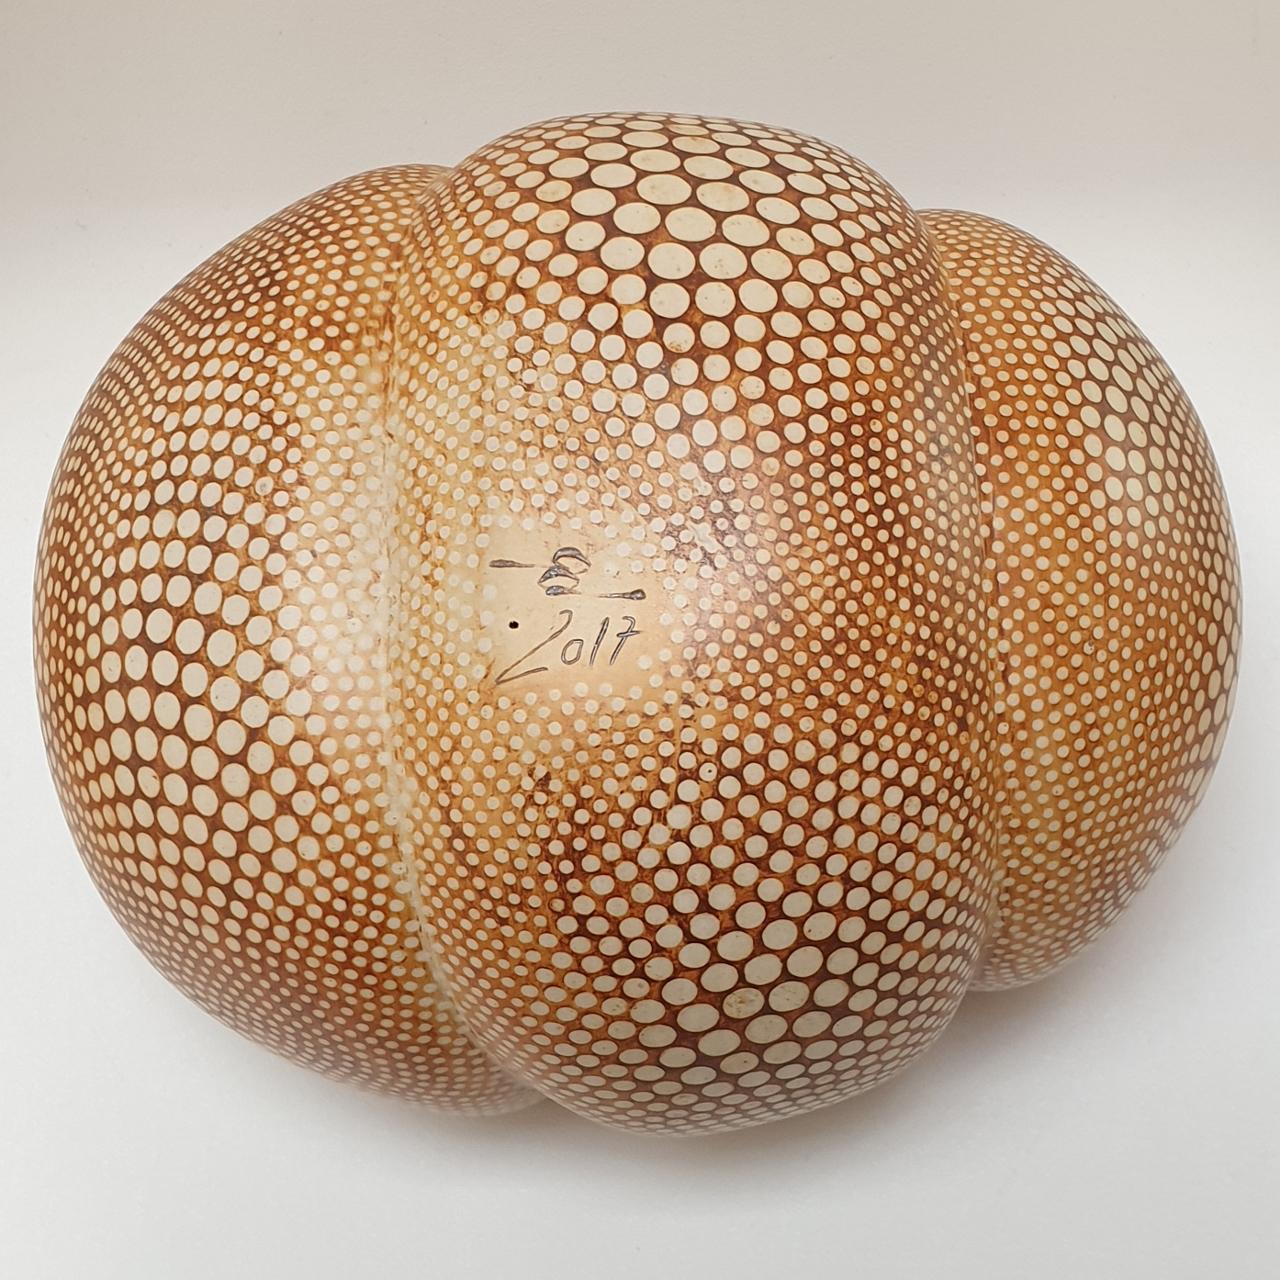 Kokon gepunktet - contemporary modern abstract organic ceramic sculpture object - Contemporary Sculpture by Petra Benndorf